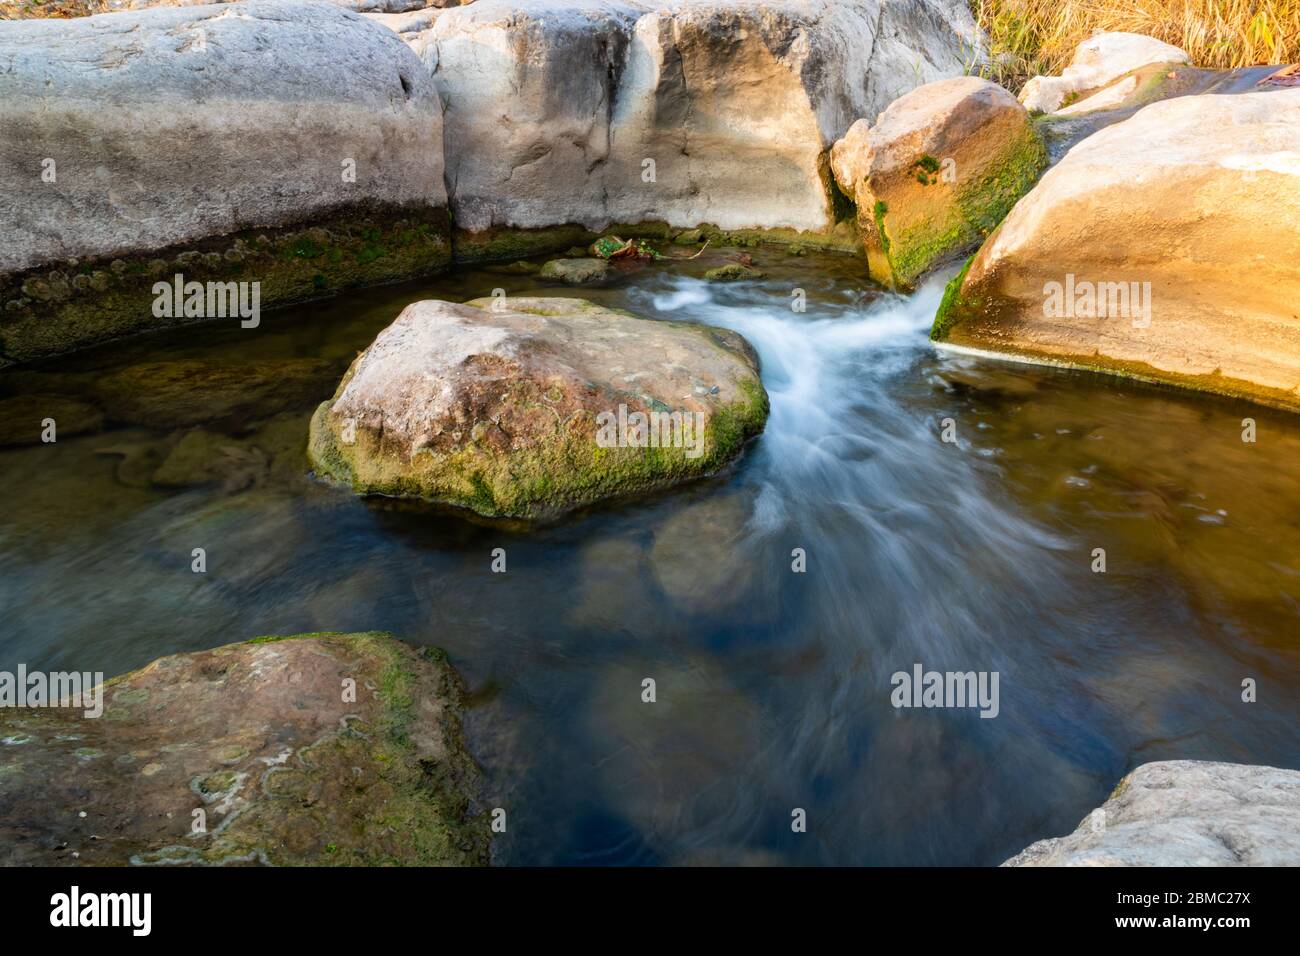 A stream in the rocks Stock Photo